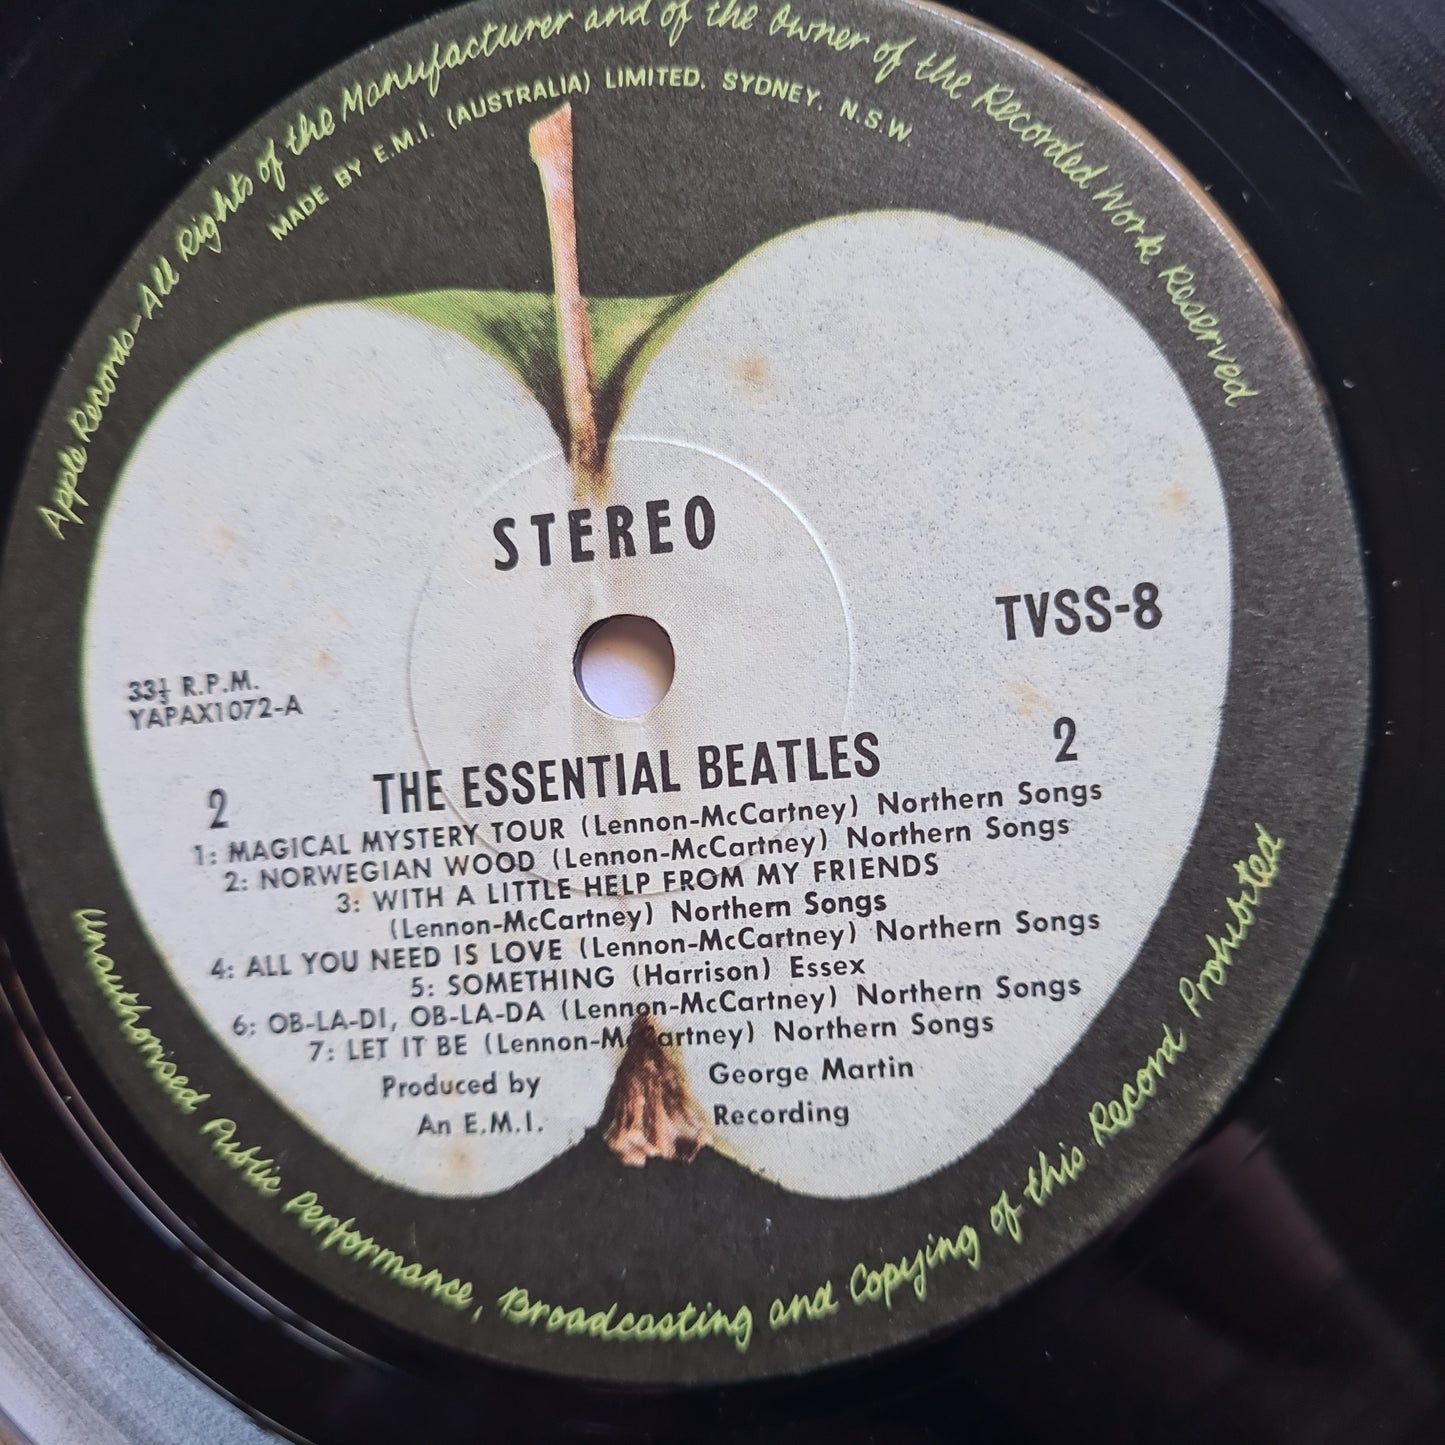 The Beatles – The Essential Beatles - 1982 - Vinyl Record